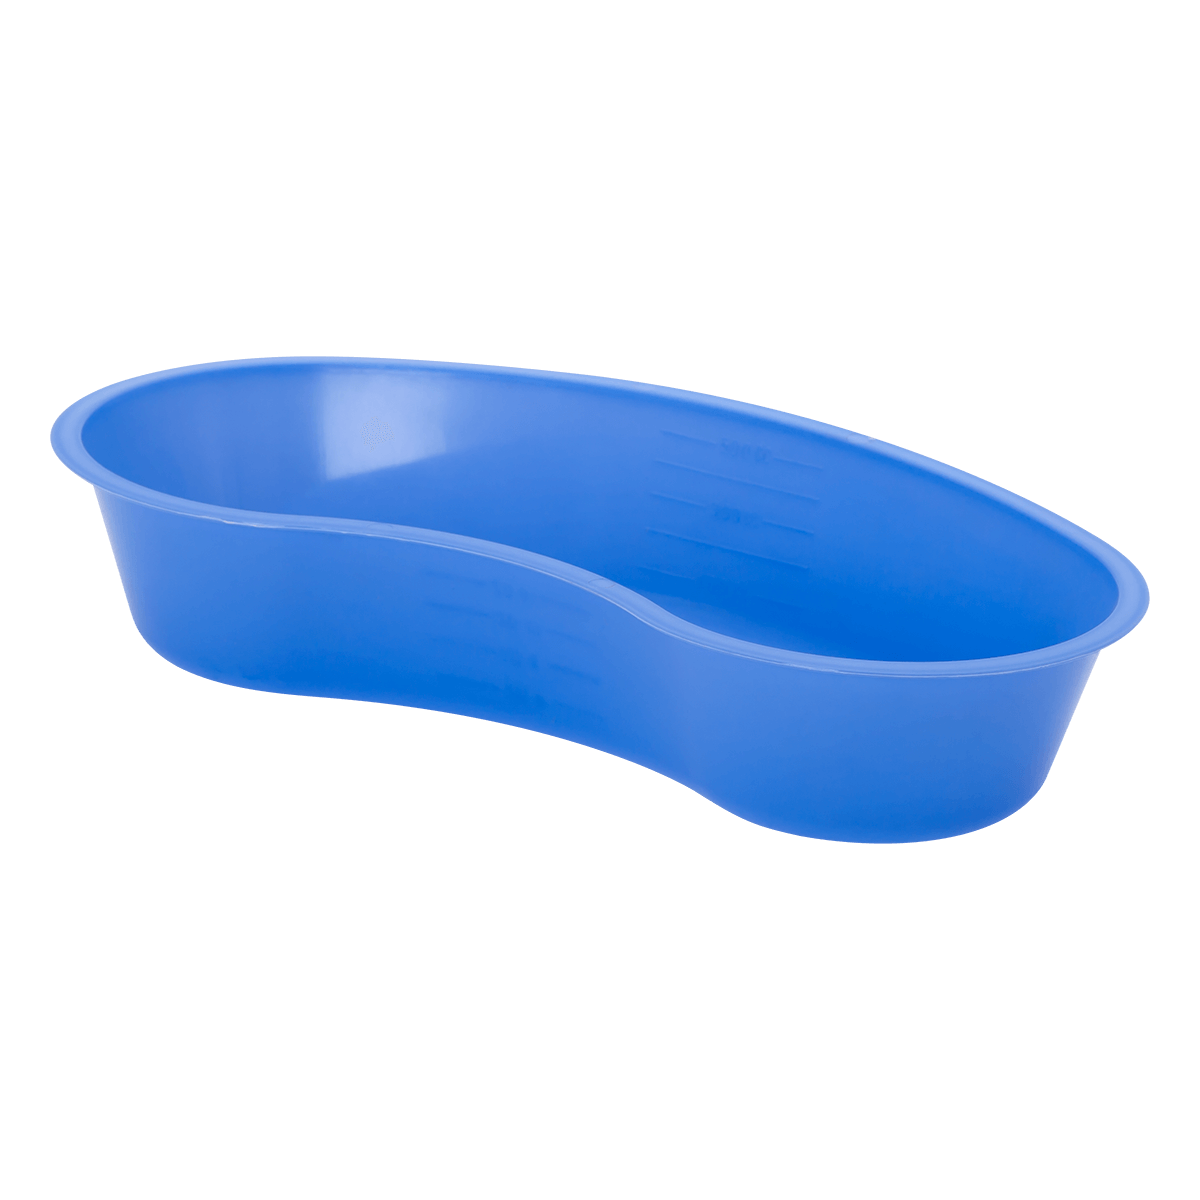 Kidney bowl - Plastic 24cm